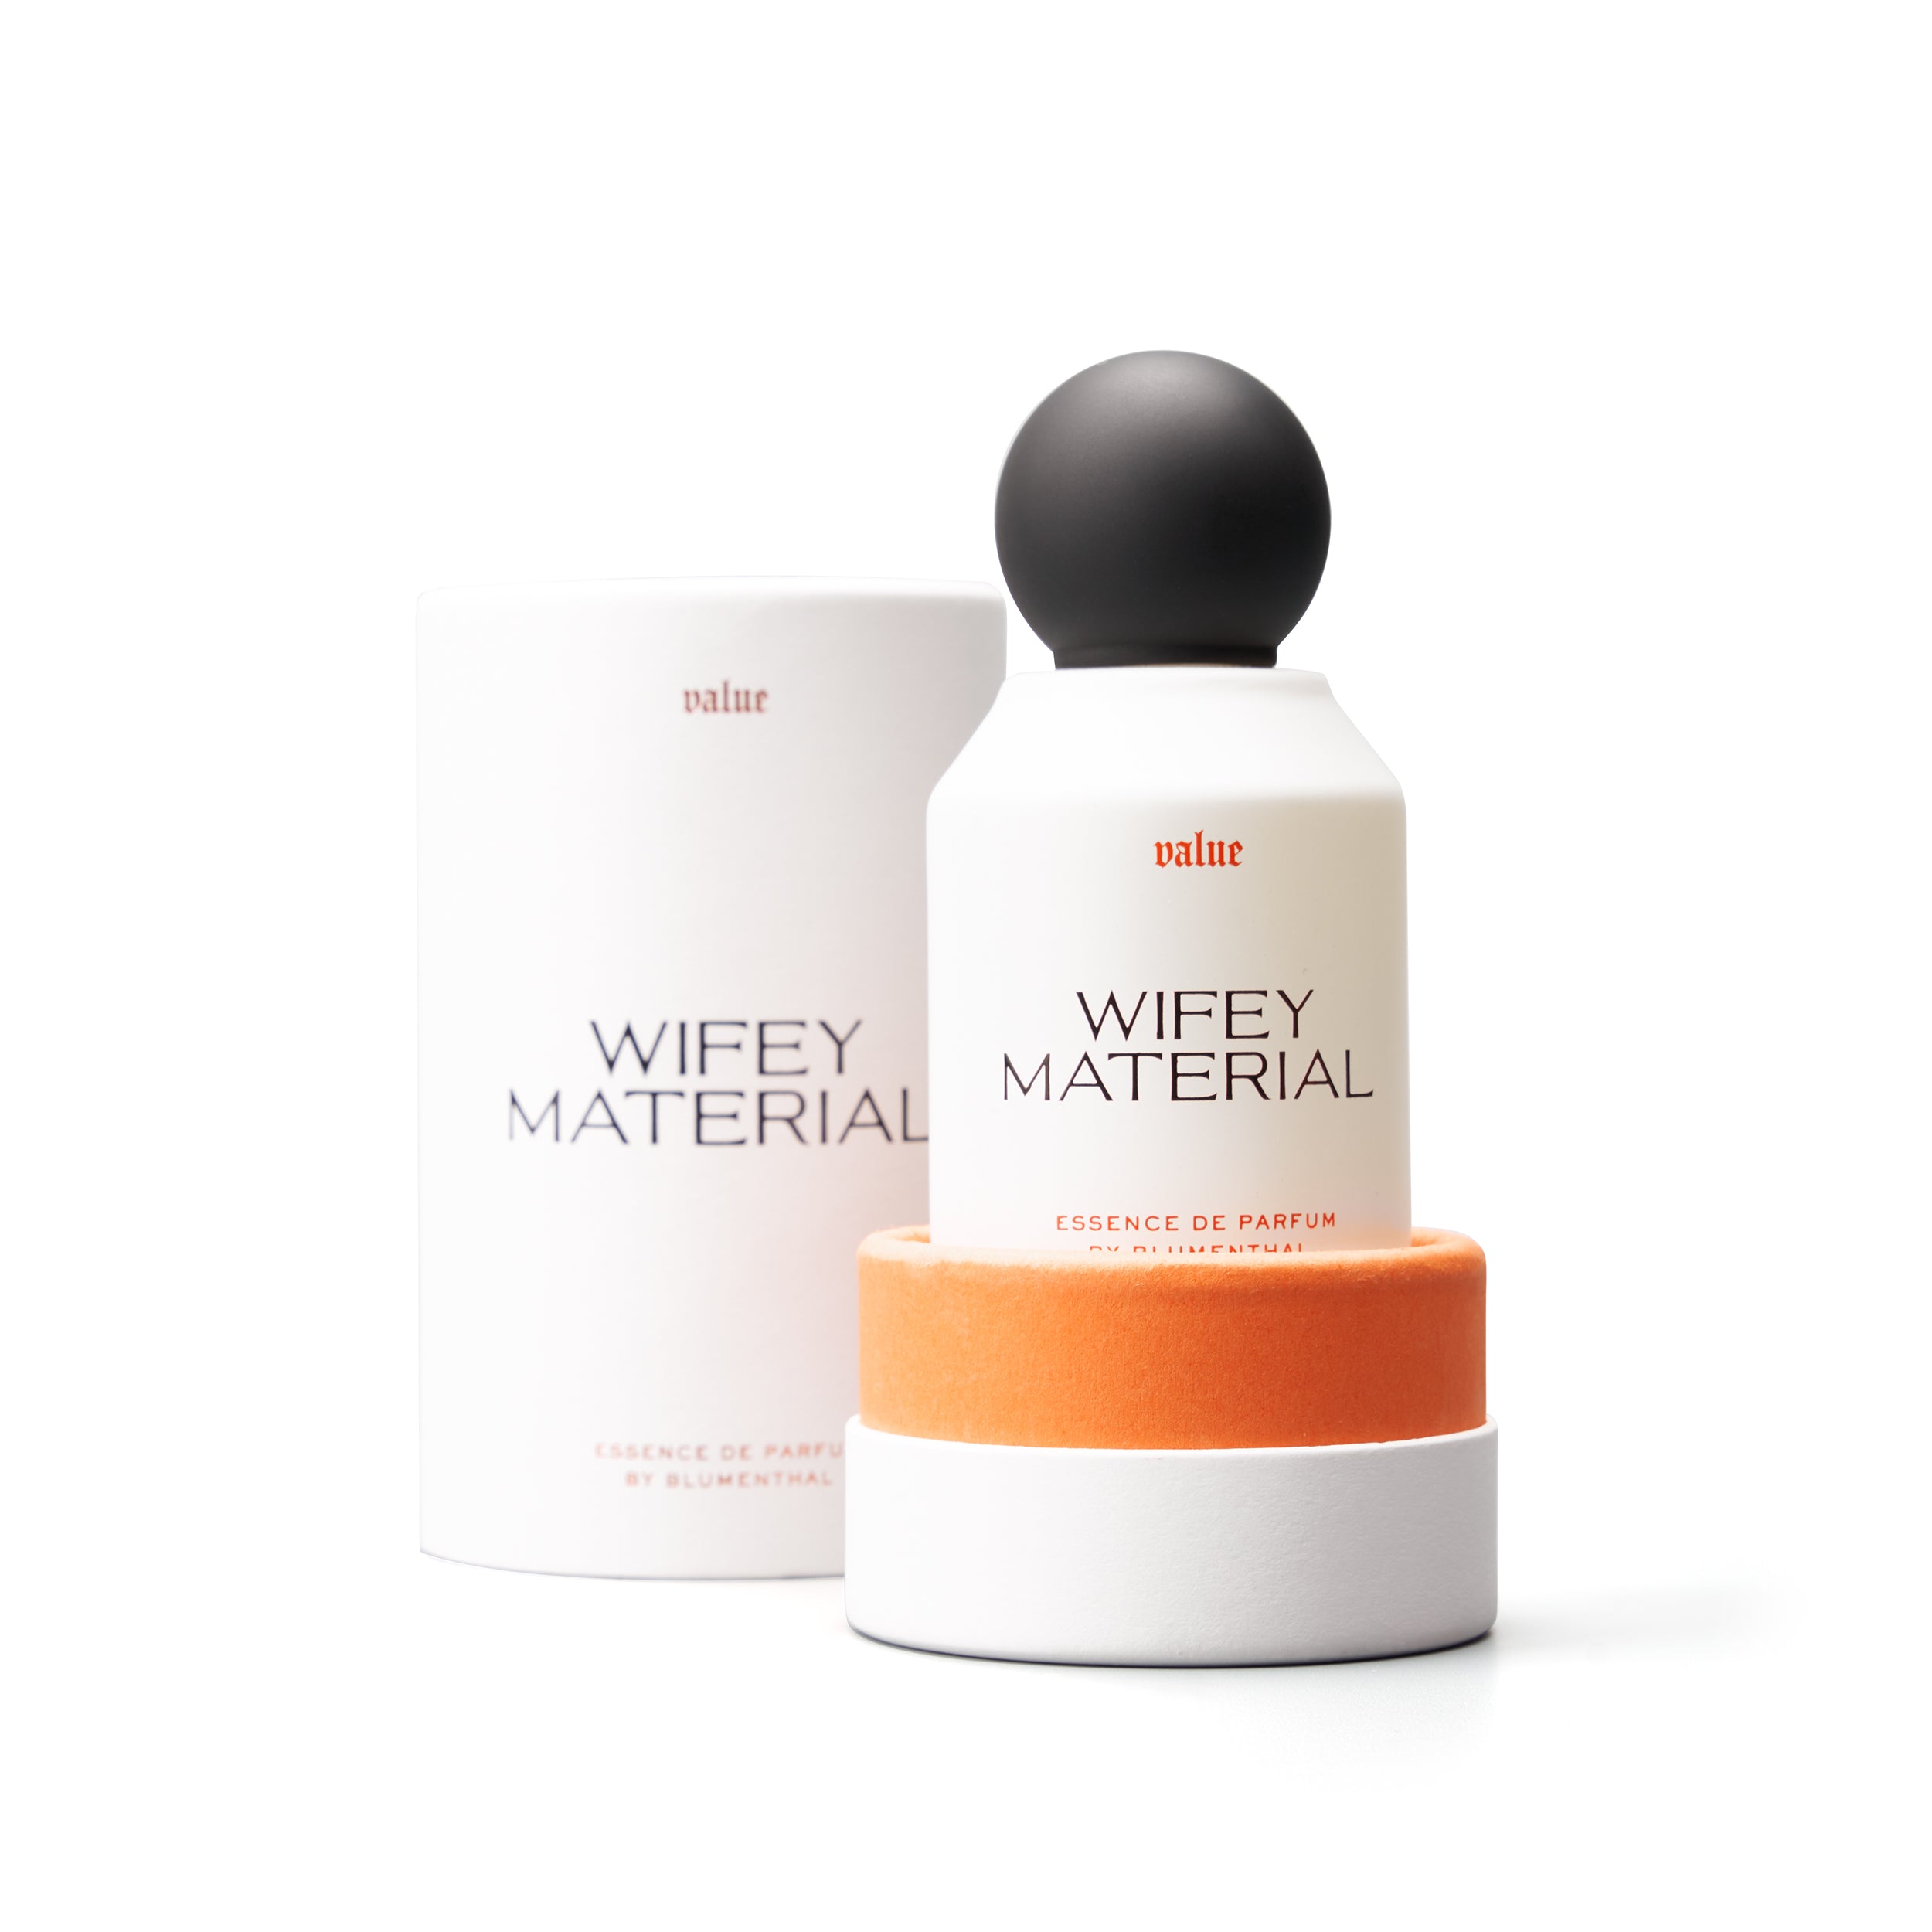 "Wifey Material" Essence de Parfum